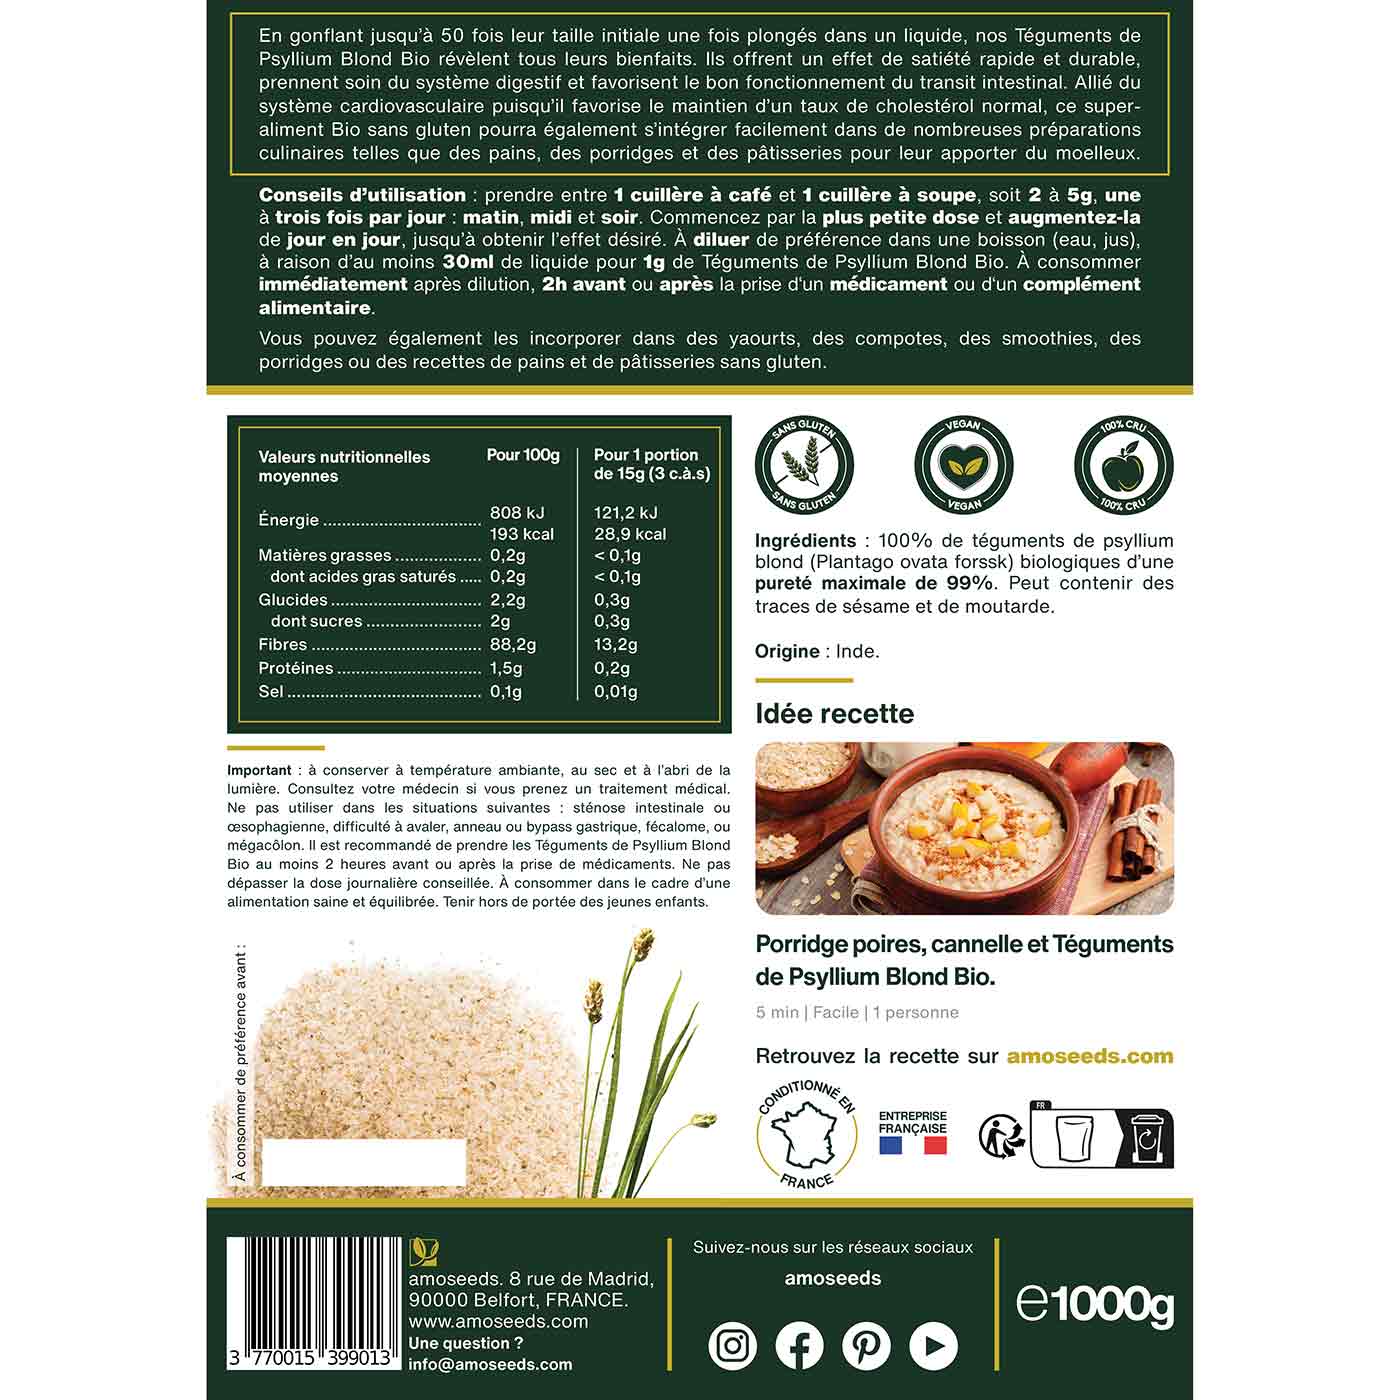 Teguments Psyllium Blond Bio 1KG amoseeds specialiste des super aliments Bio